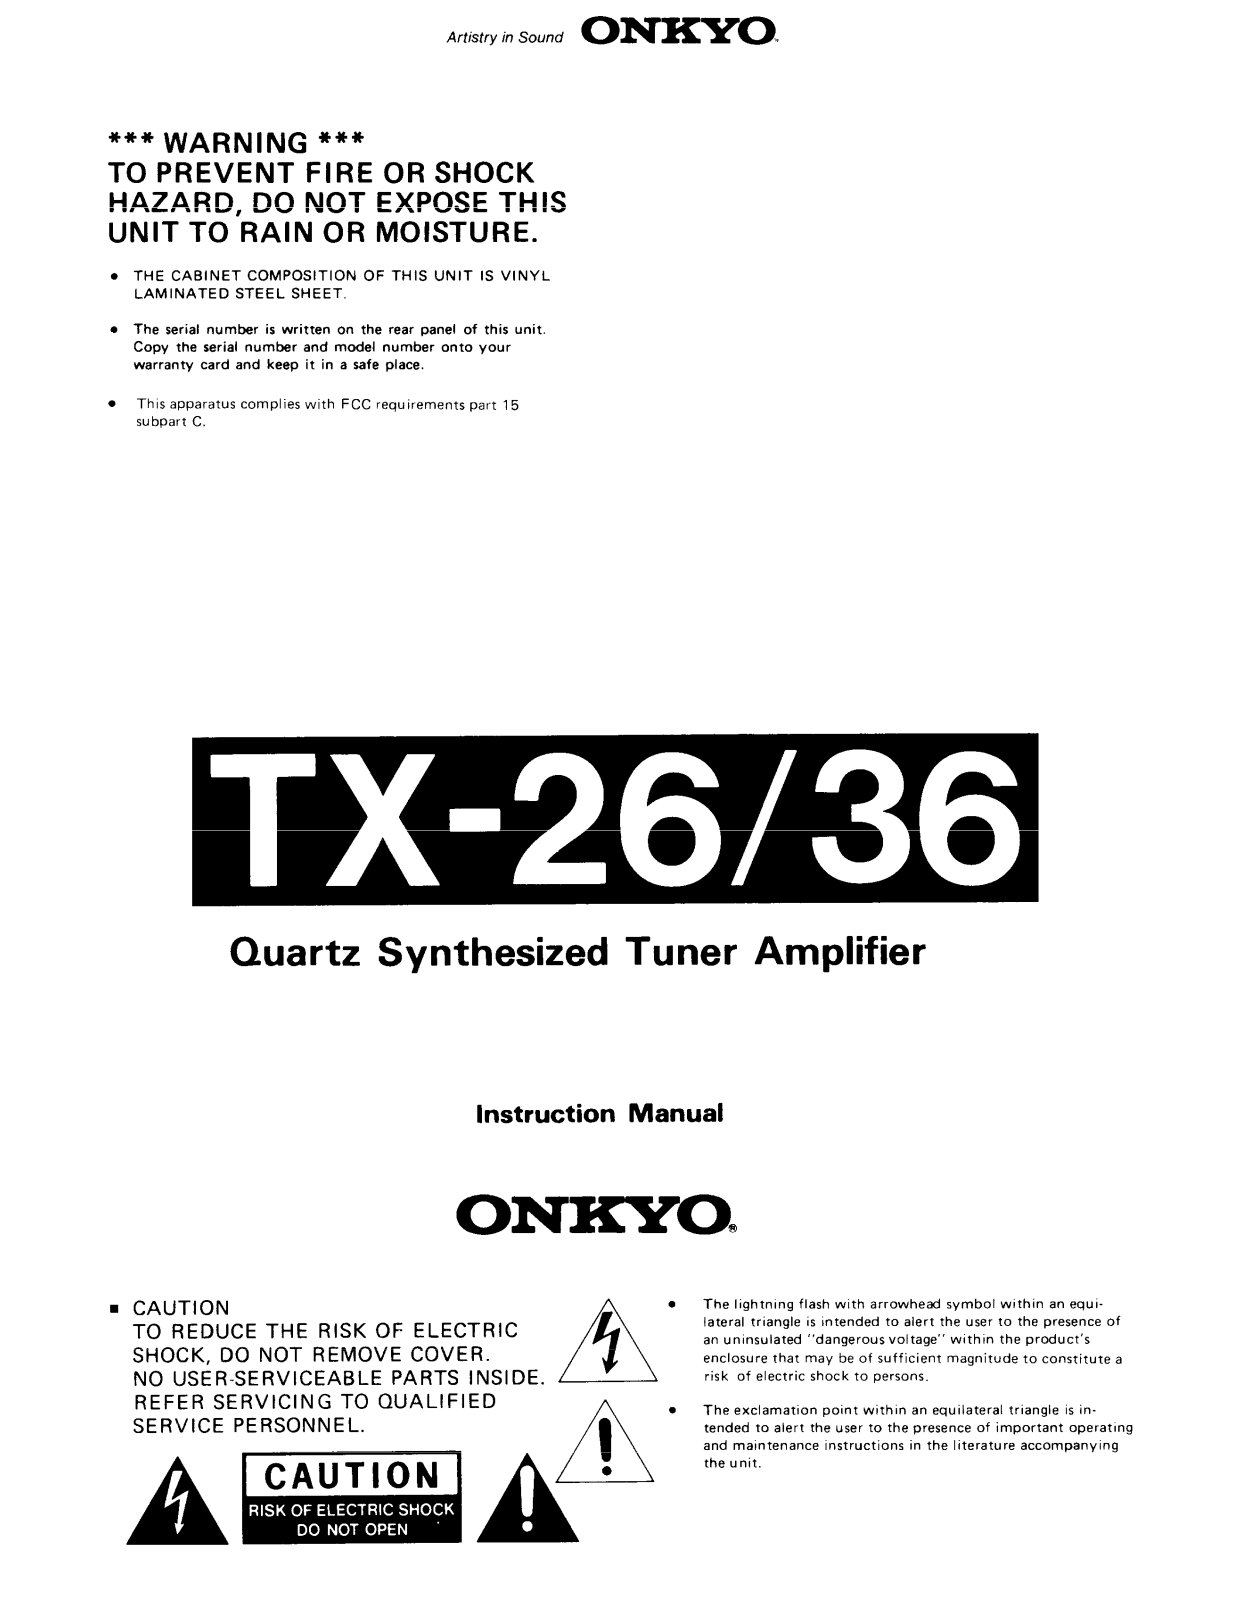 Onkyo TX-36, TX-26 Instruction Manual